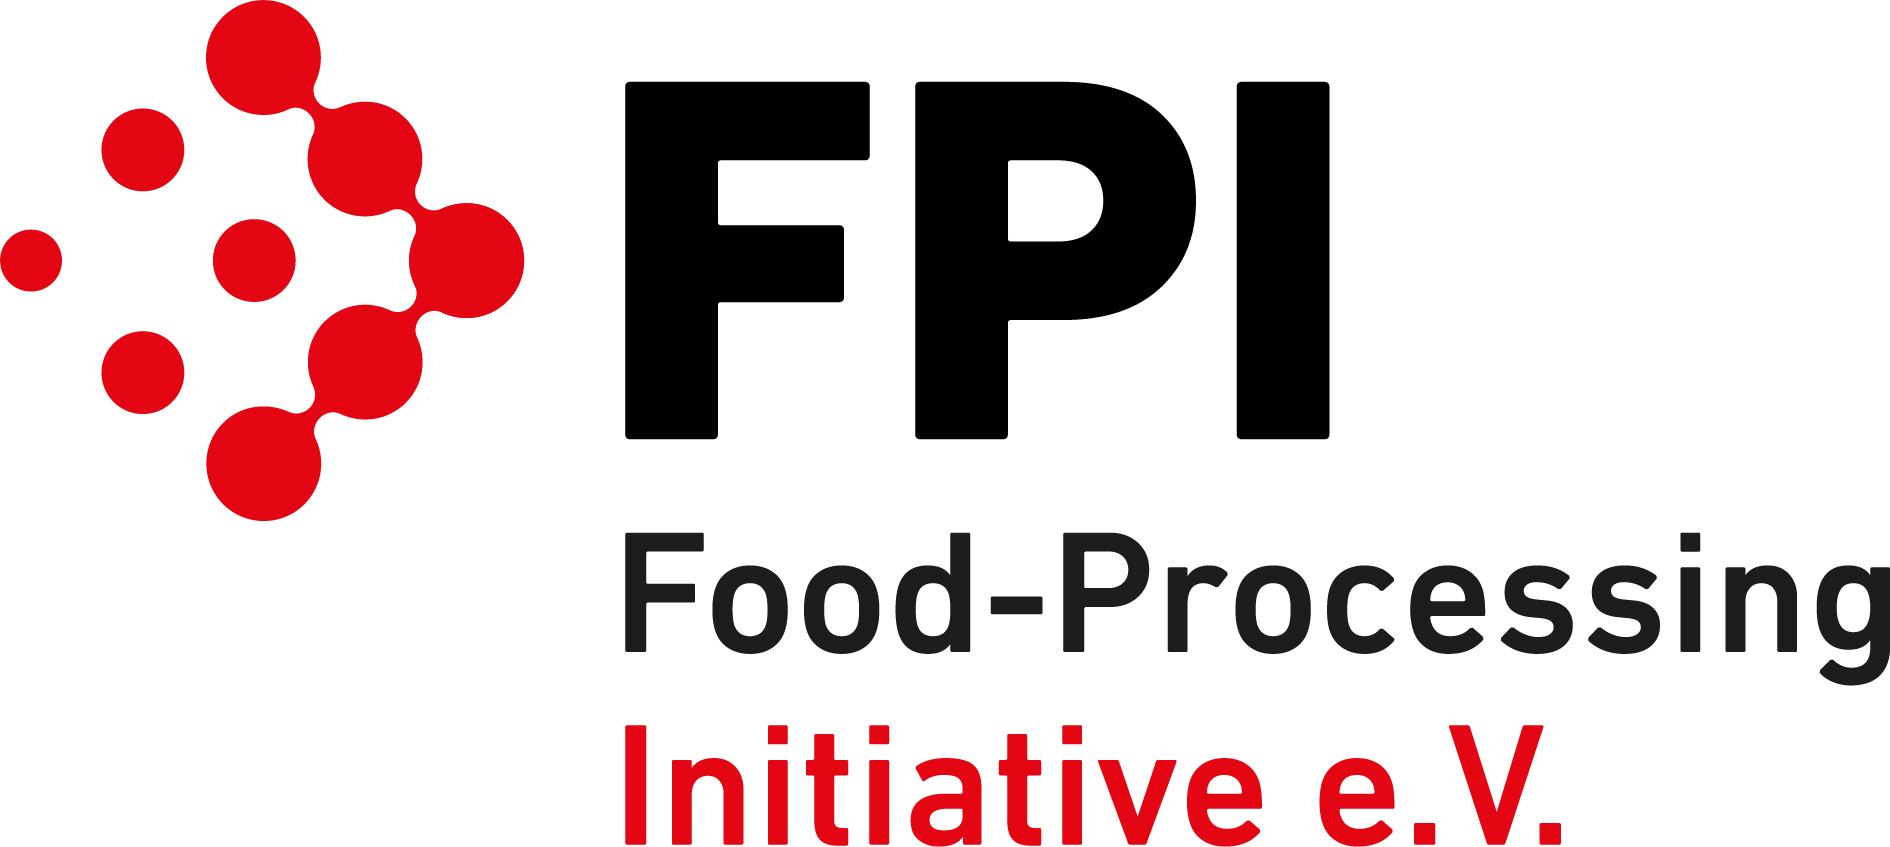 Food-Processing Initiative